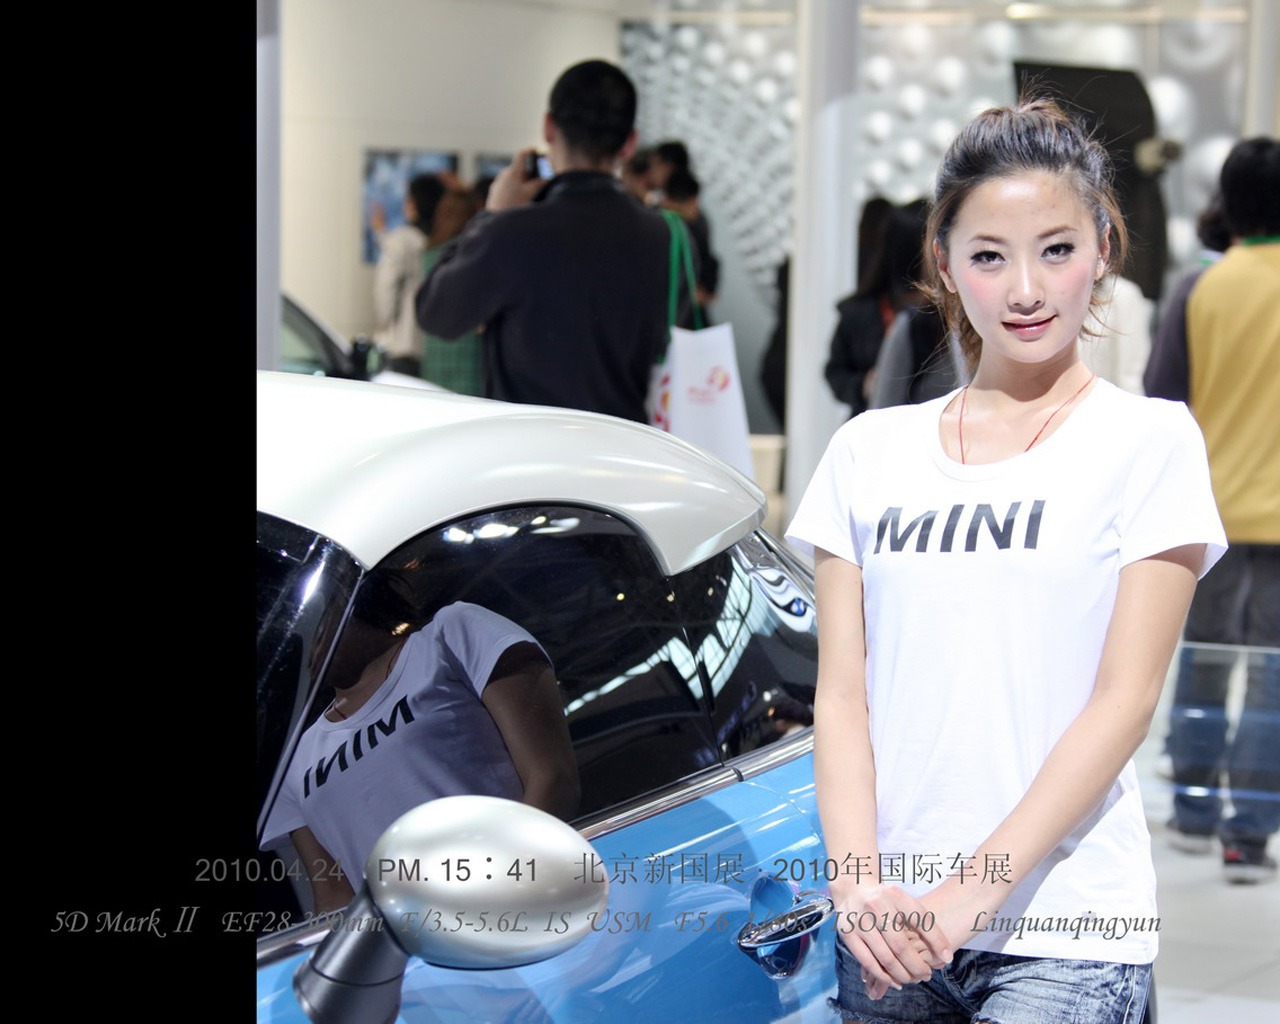 2010-4-24 Beijing International Auto Show (Linquan Qing Yun works) #15 - 1280x1024